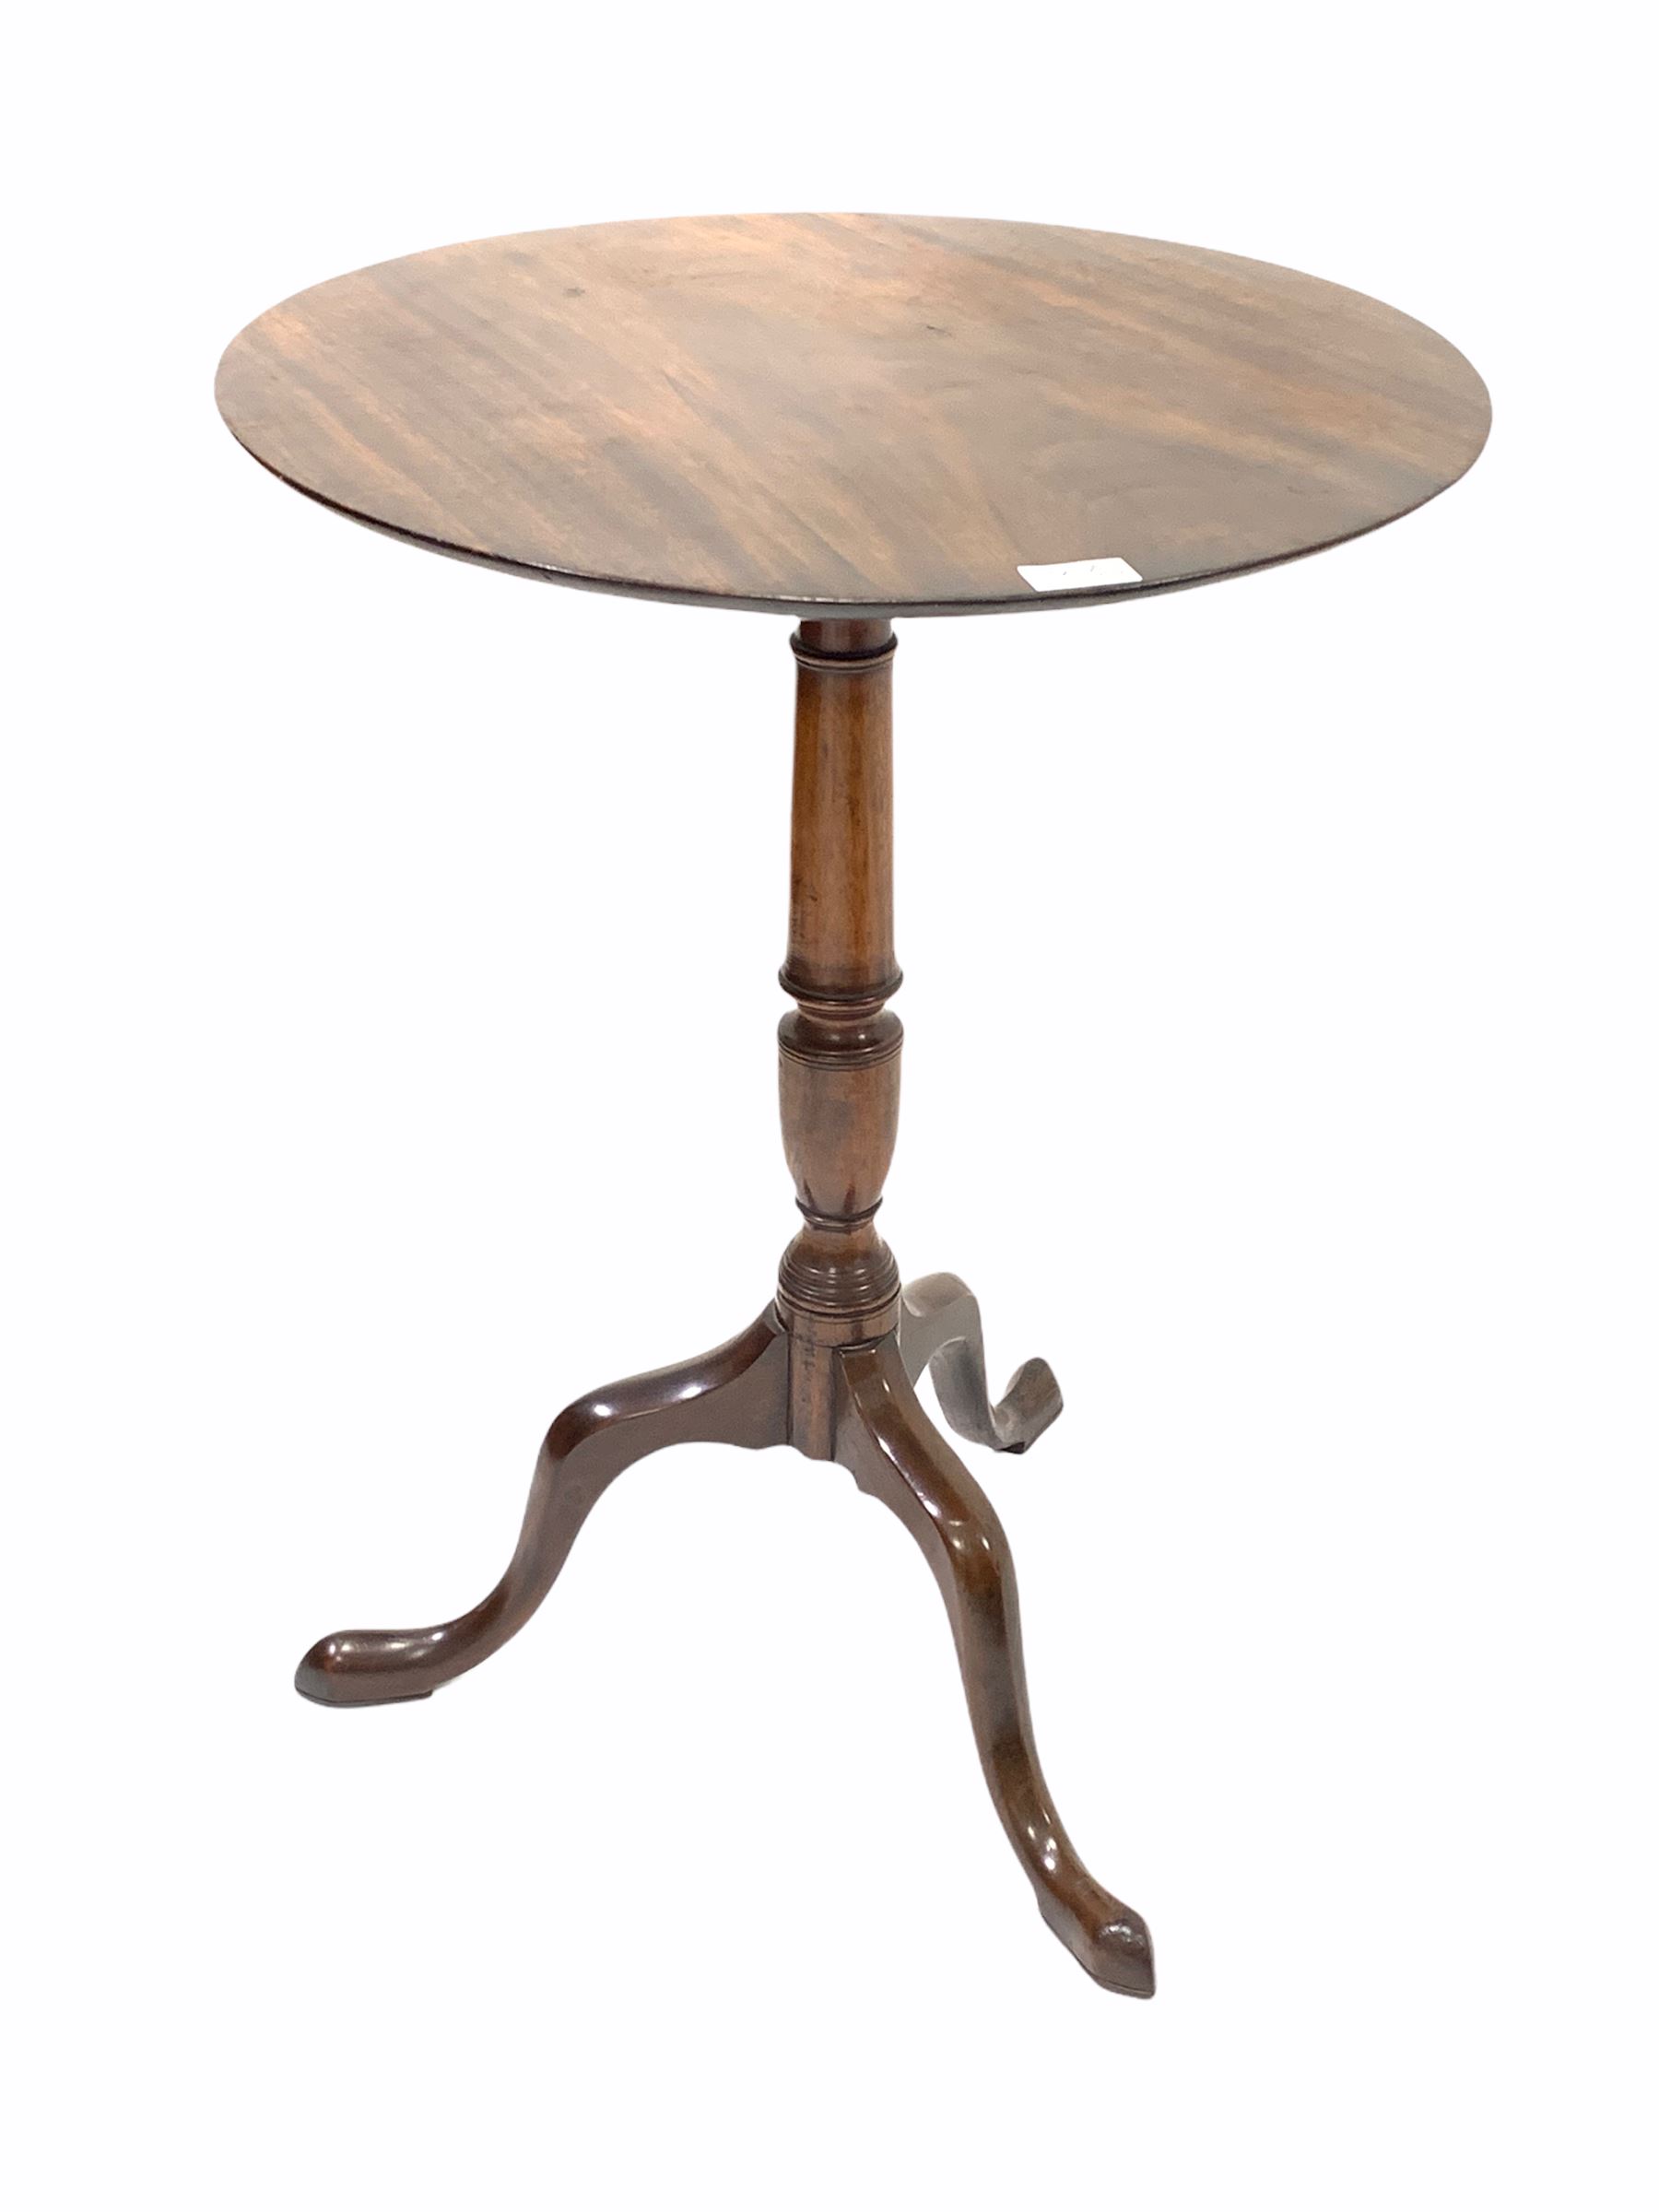 19th century mahogany tripod occasional table